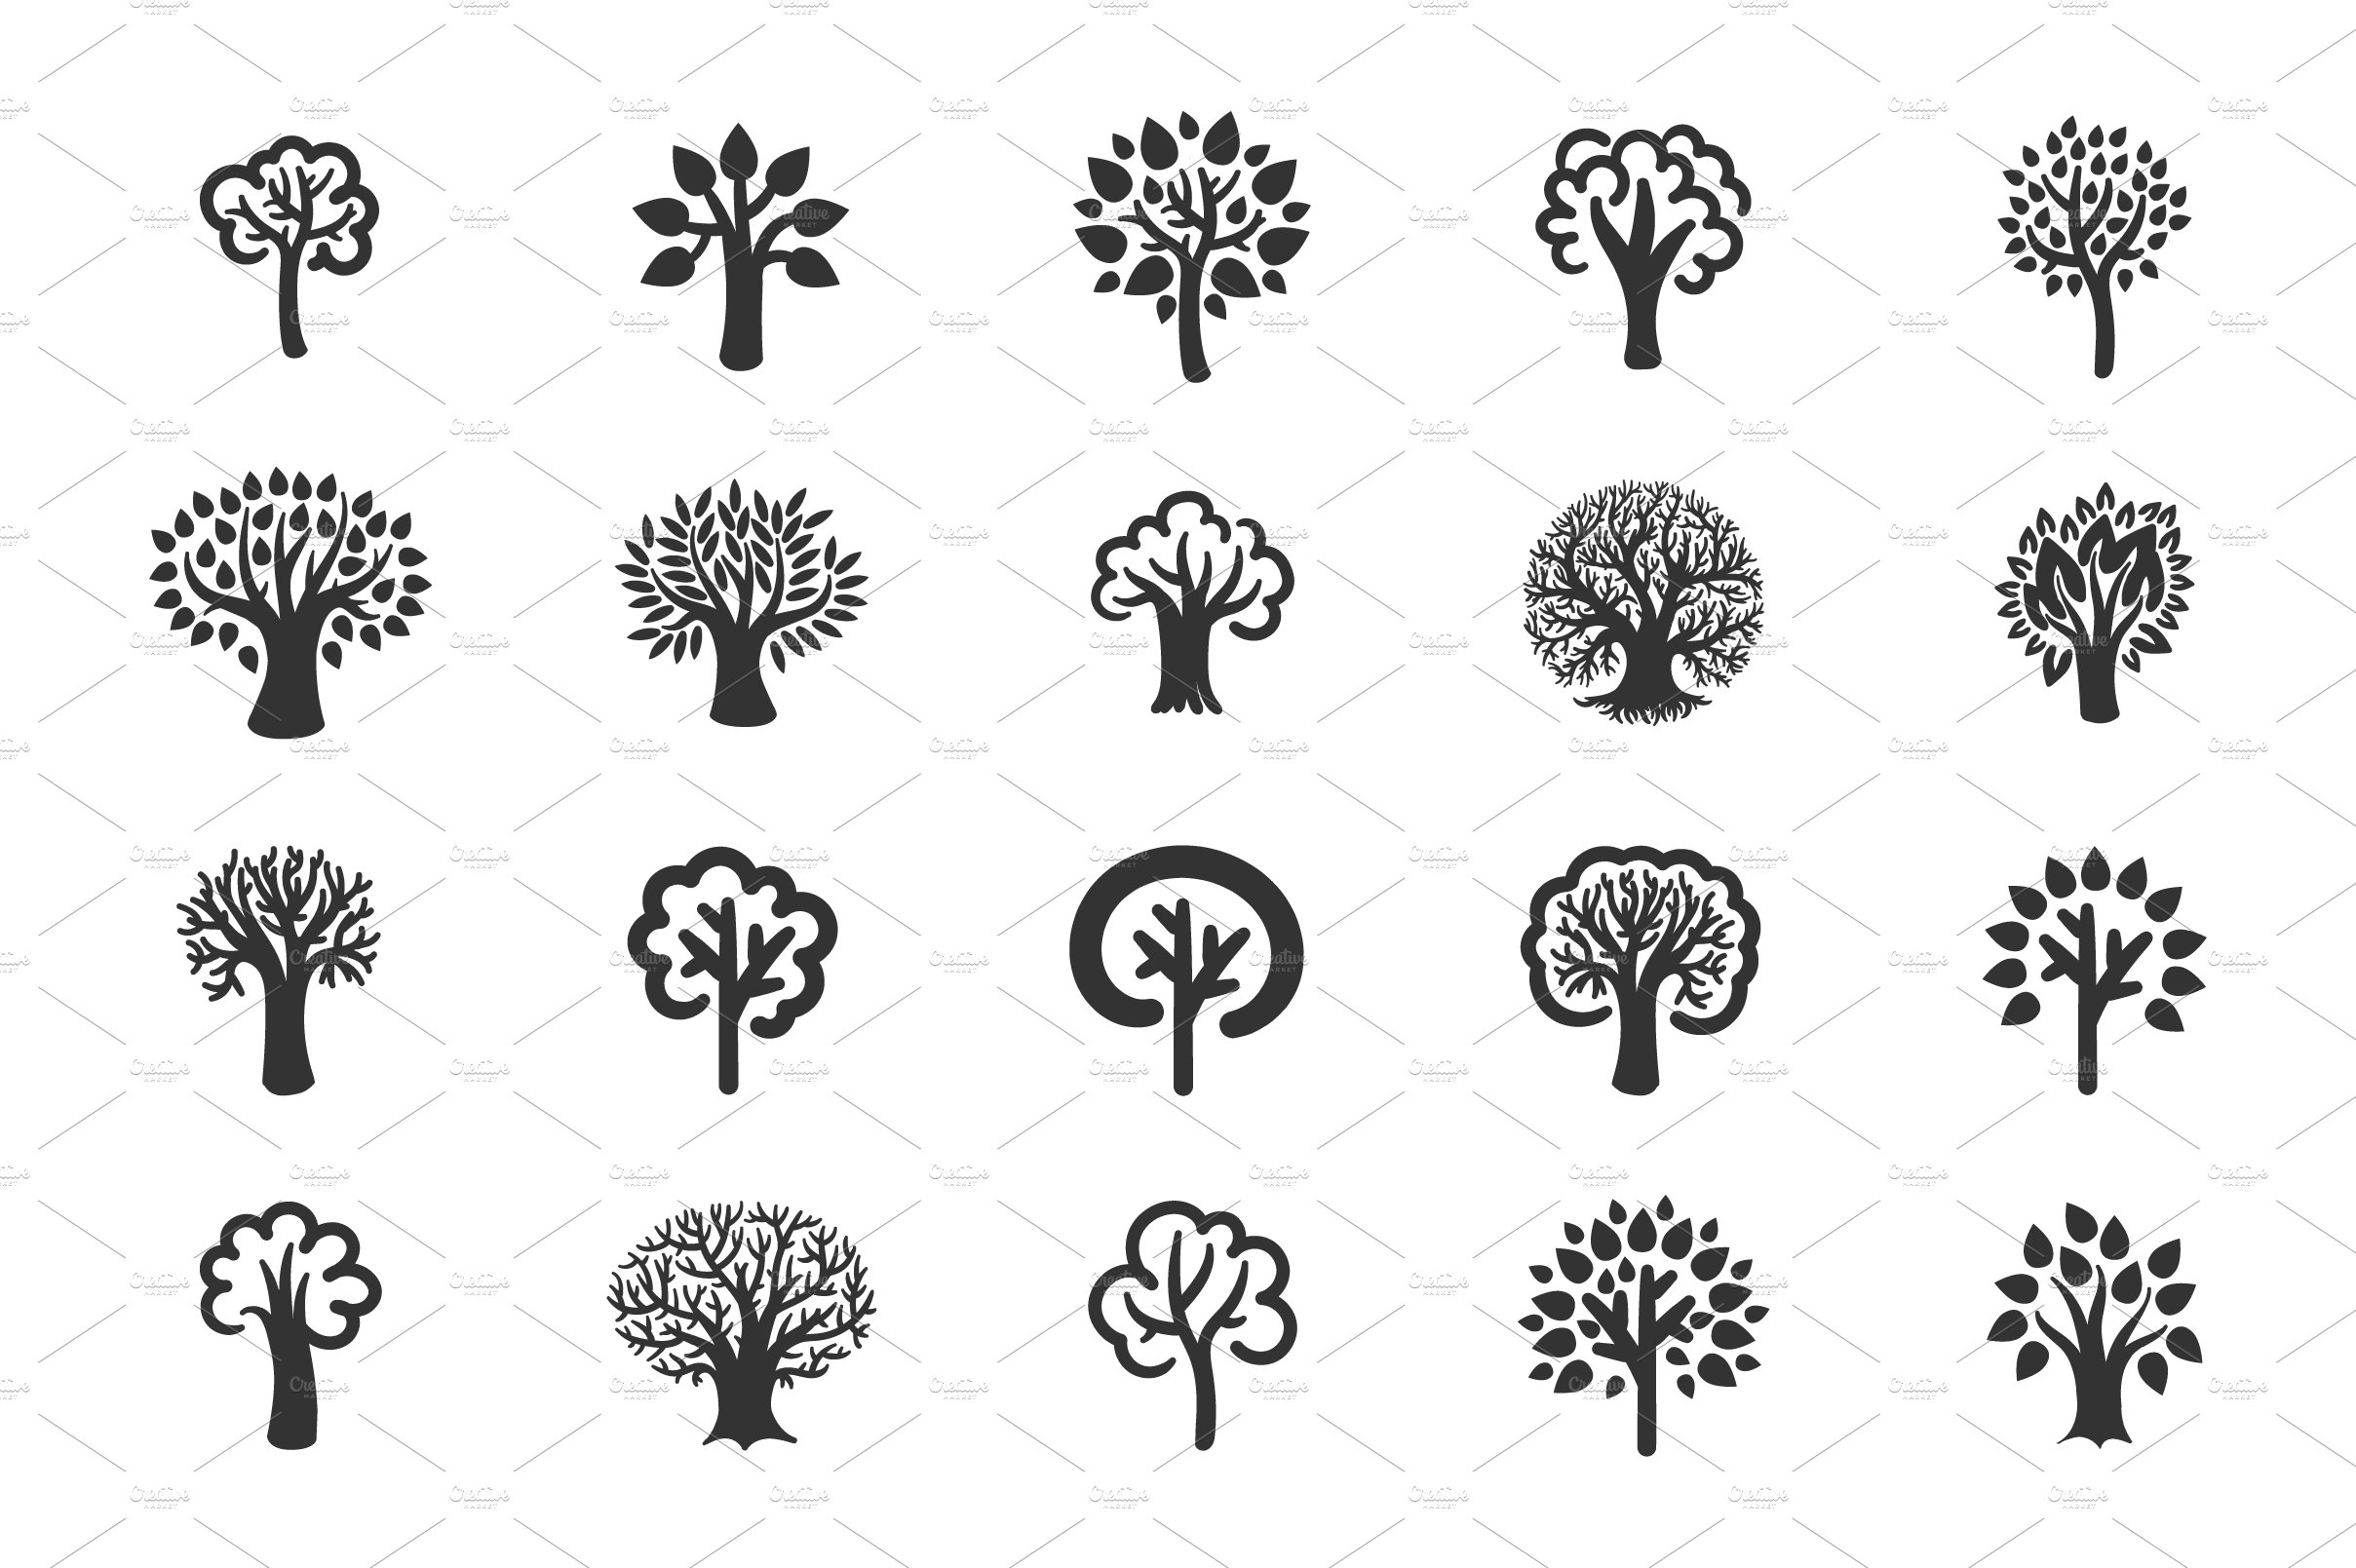 Tree icon set preview image.